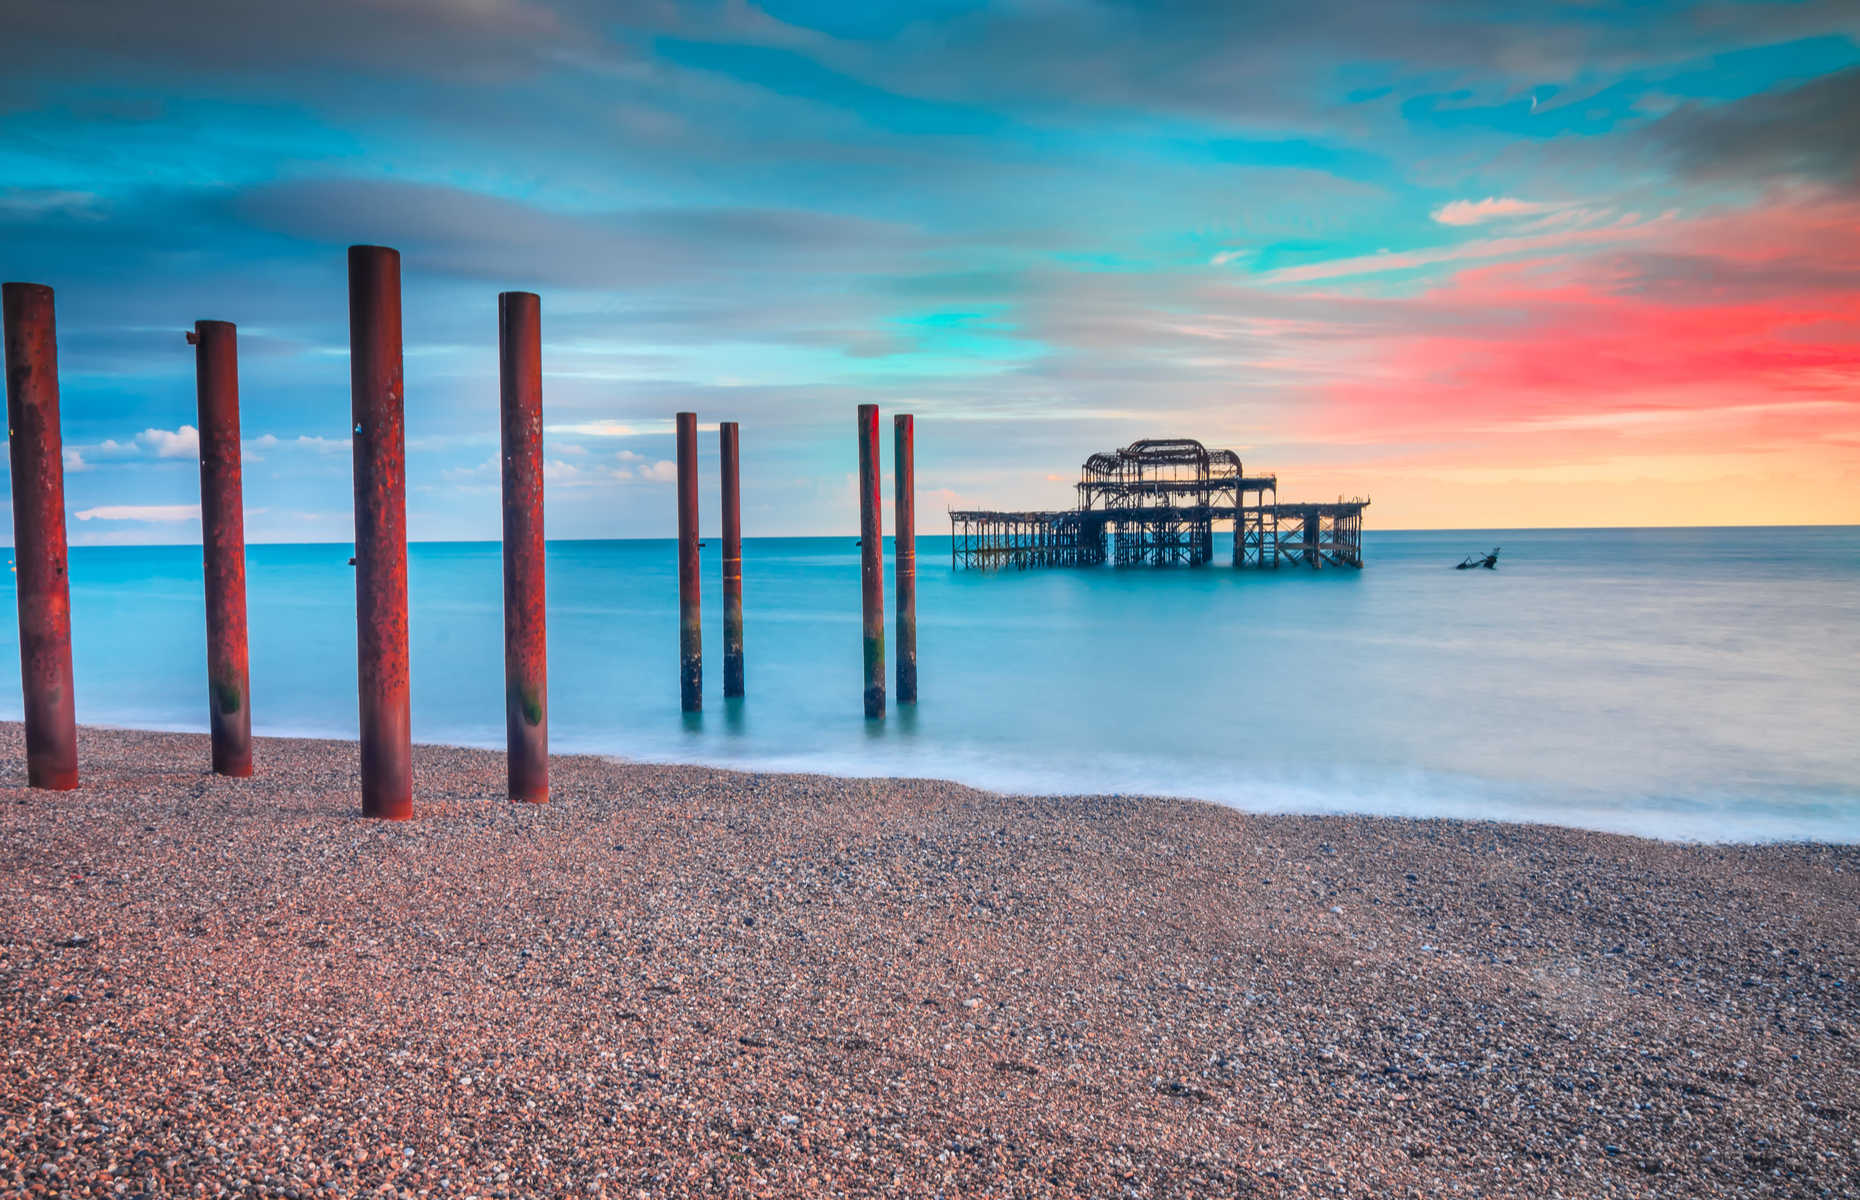 West Pier in Brighton from beach (Image: Steve Buckley/Shutterstock)